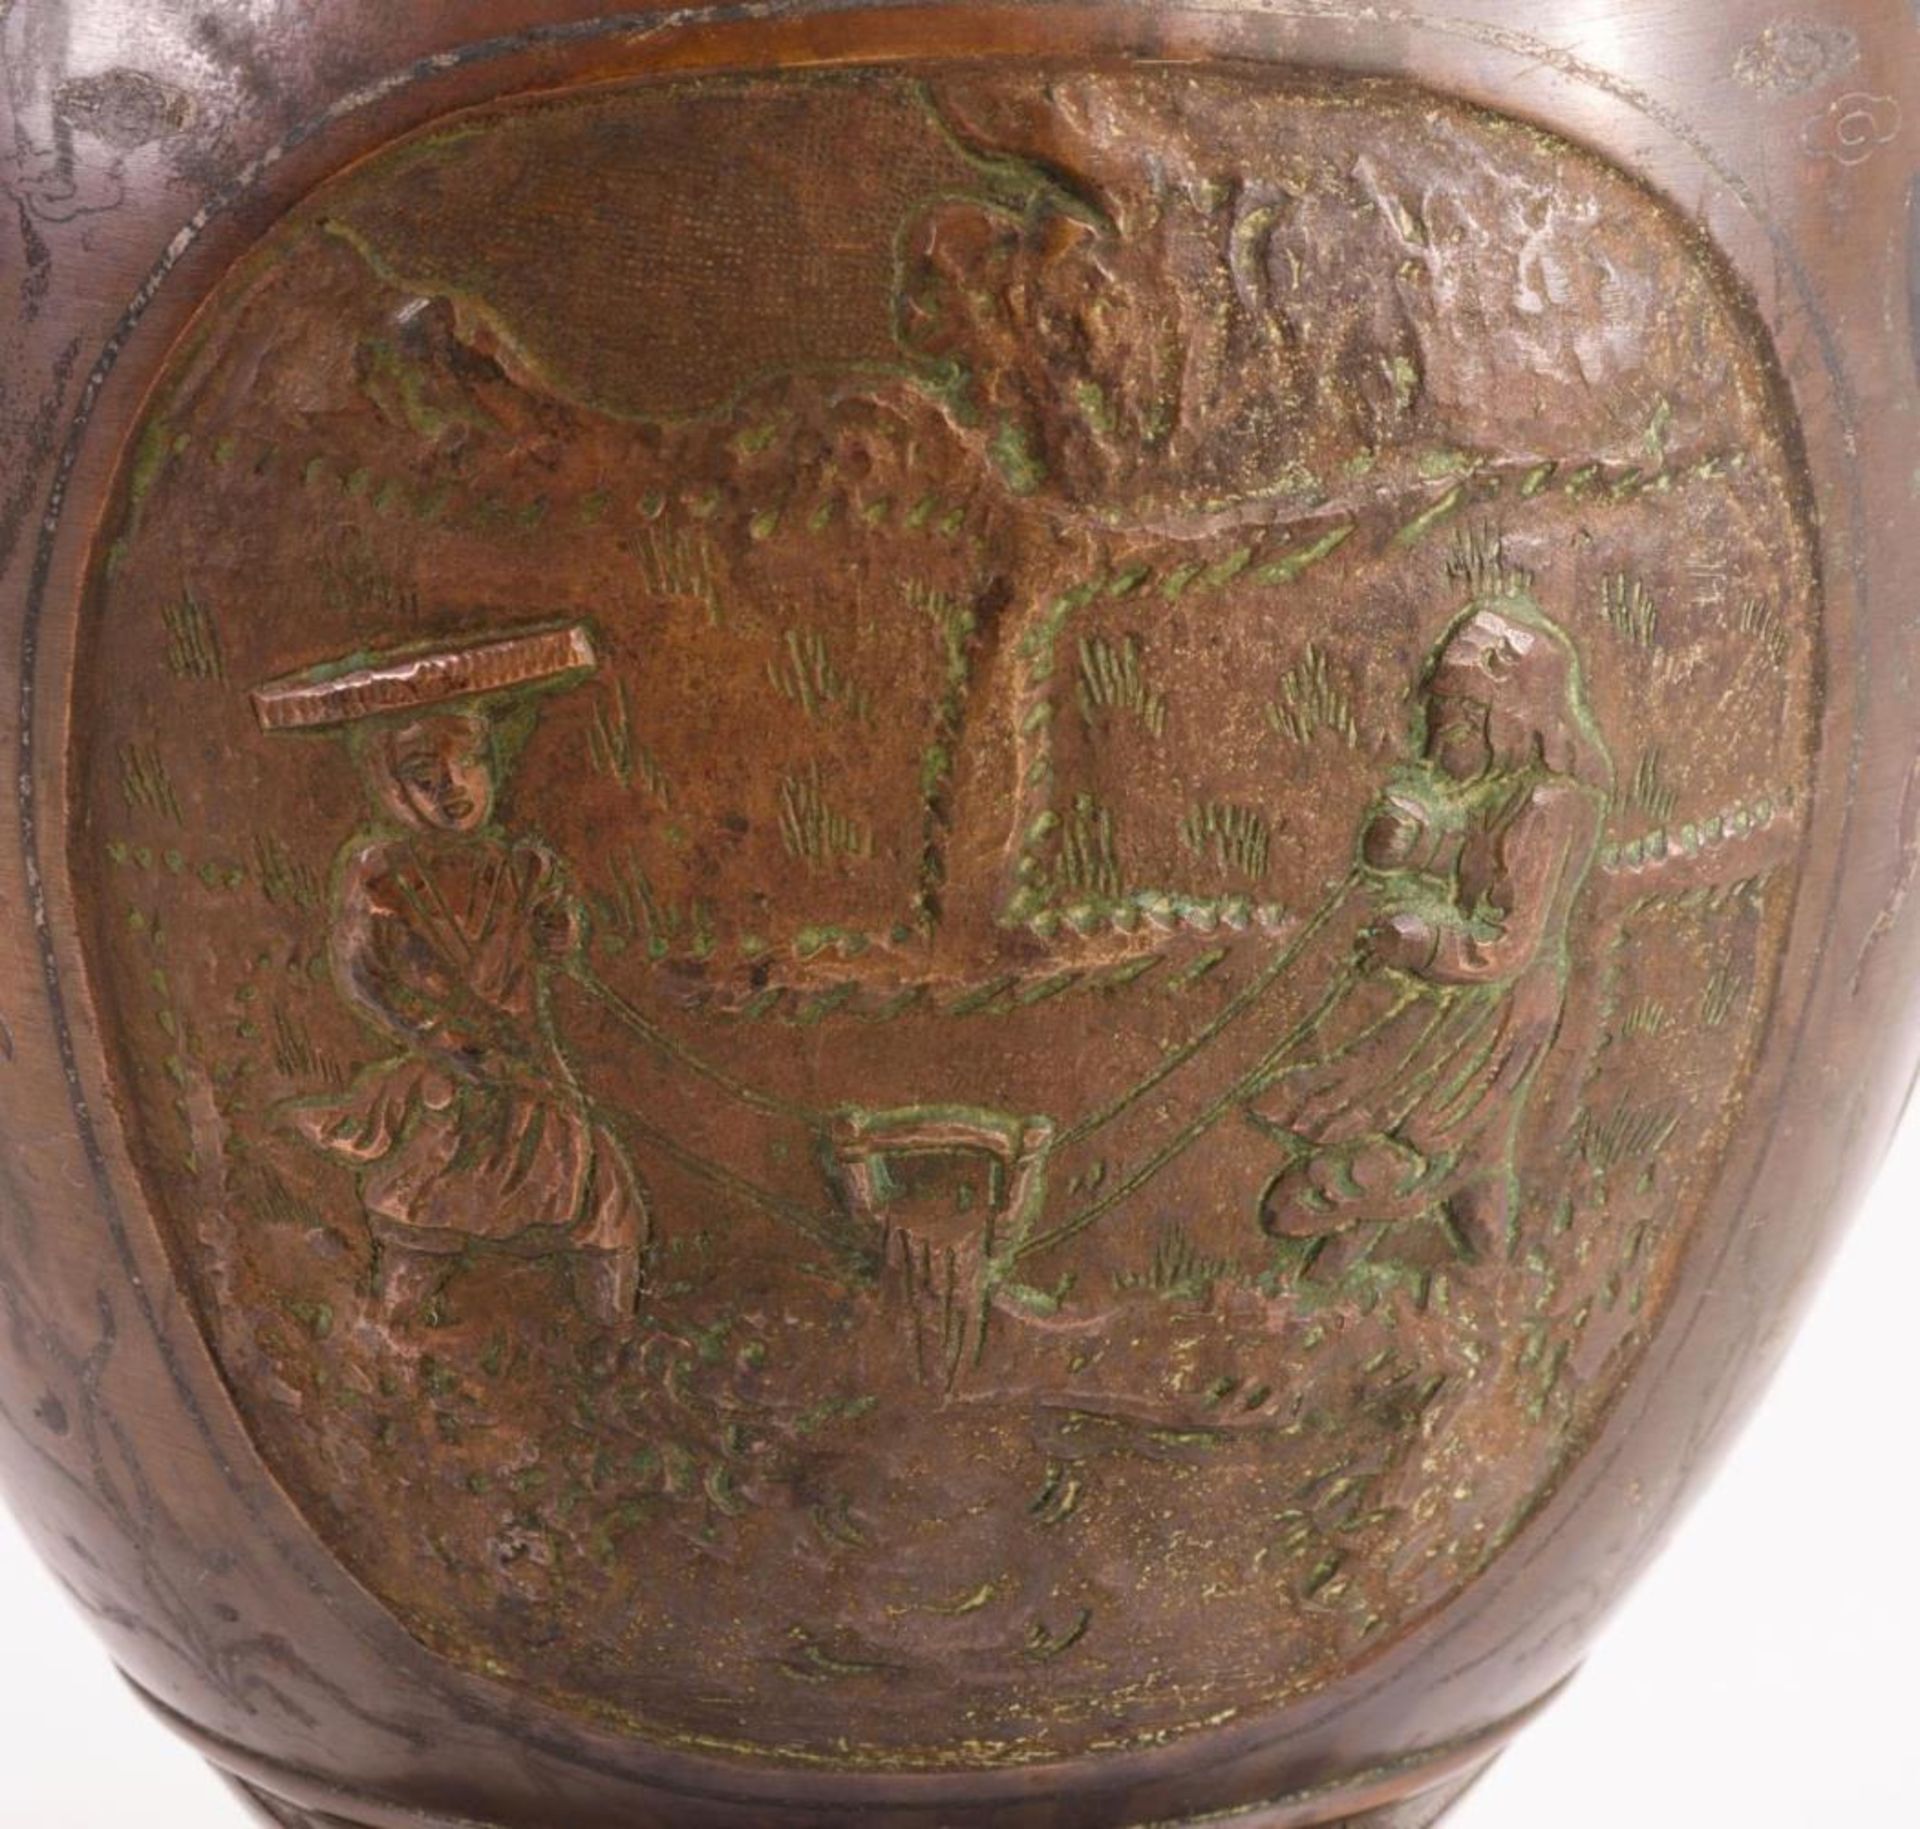 Bronzevase mit Reisanbau-Motiven - Image 2 of 4